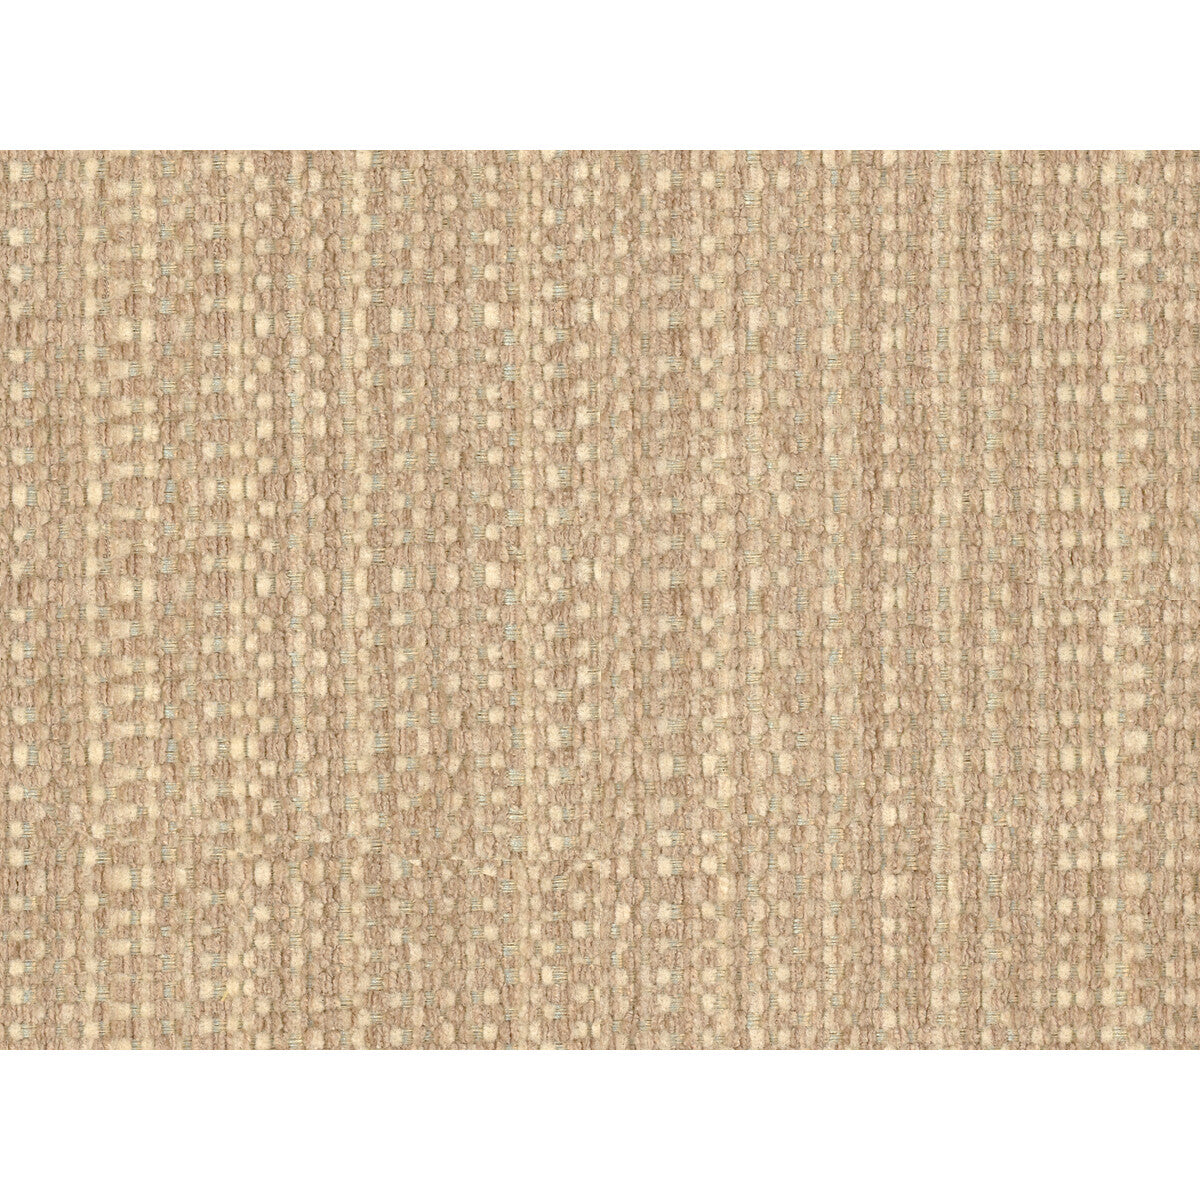 Kravet Smart fabric in 34374-11 color - pattern 34374.11.0 - by Kravet Smart